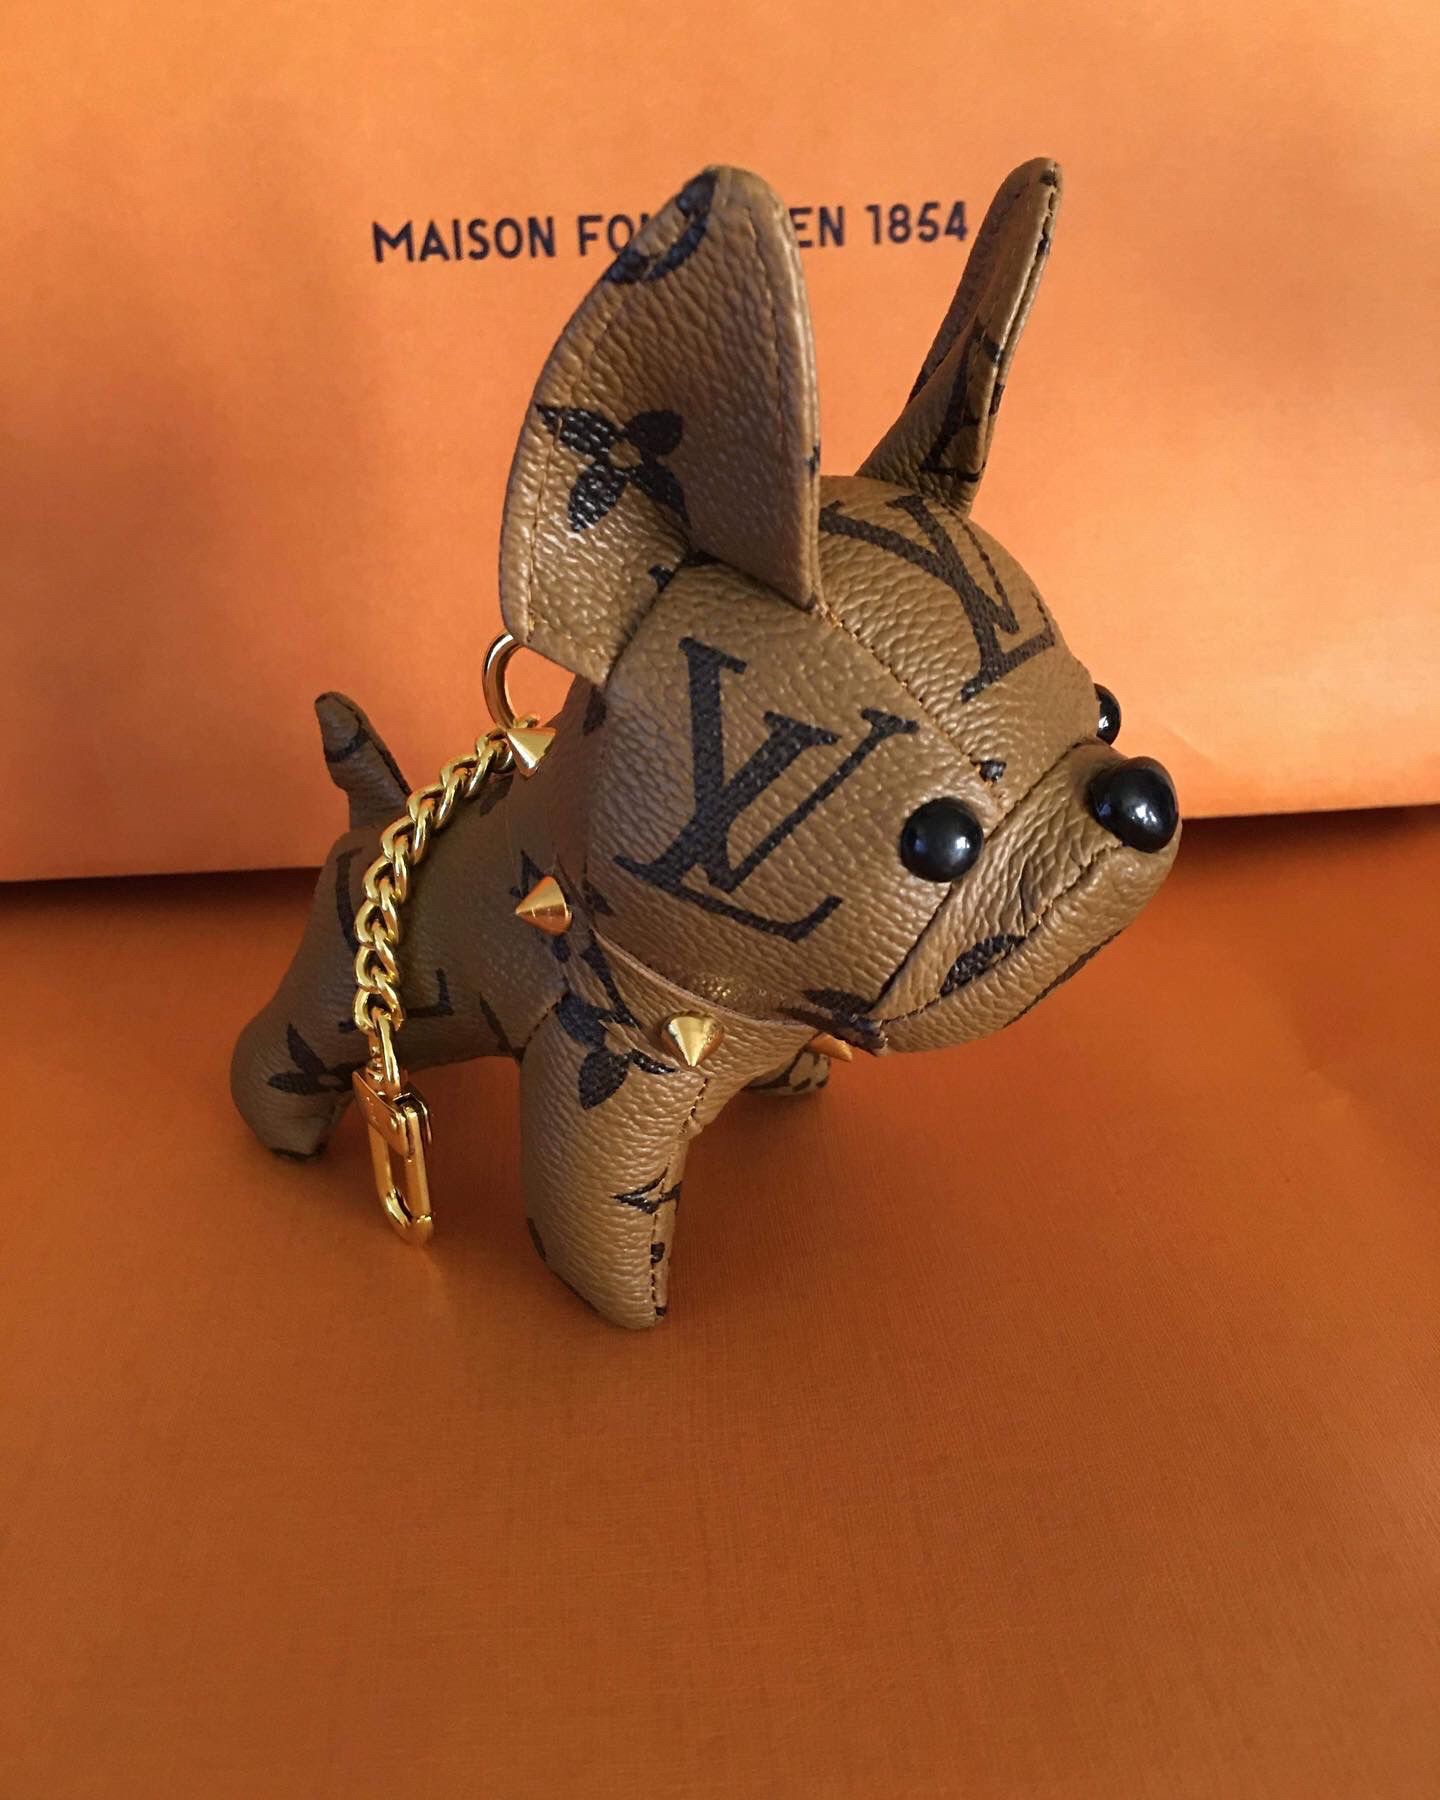 This French Bulldog bag charm is too cute